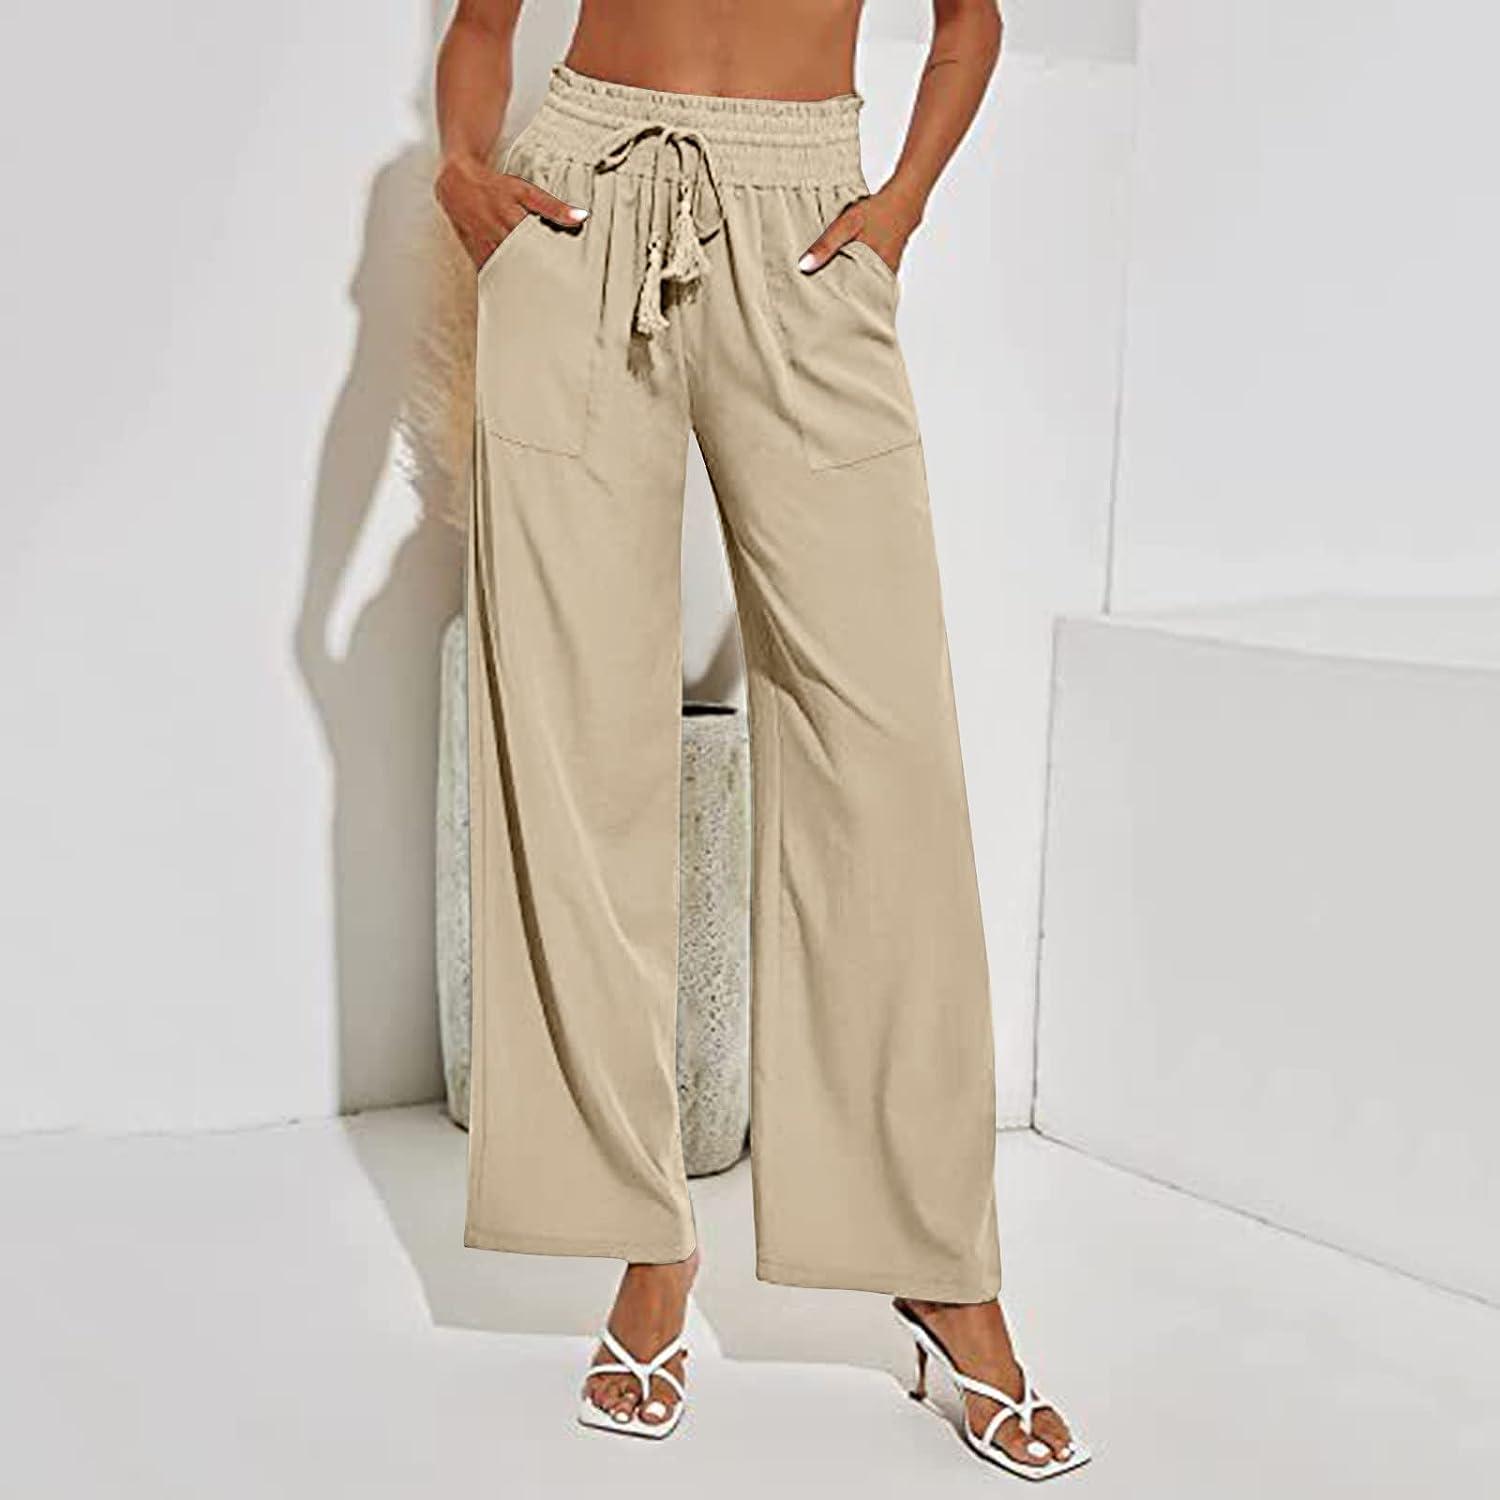 Gufesf Women's Cotton Linen Palazzo Pants Summer Wide Leg Long Trousers  with Pockets Crop Pants for Women Dressy Summer Khaki Medium